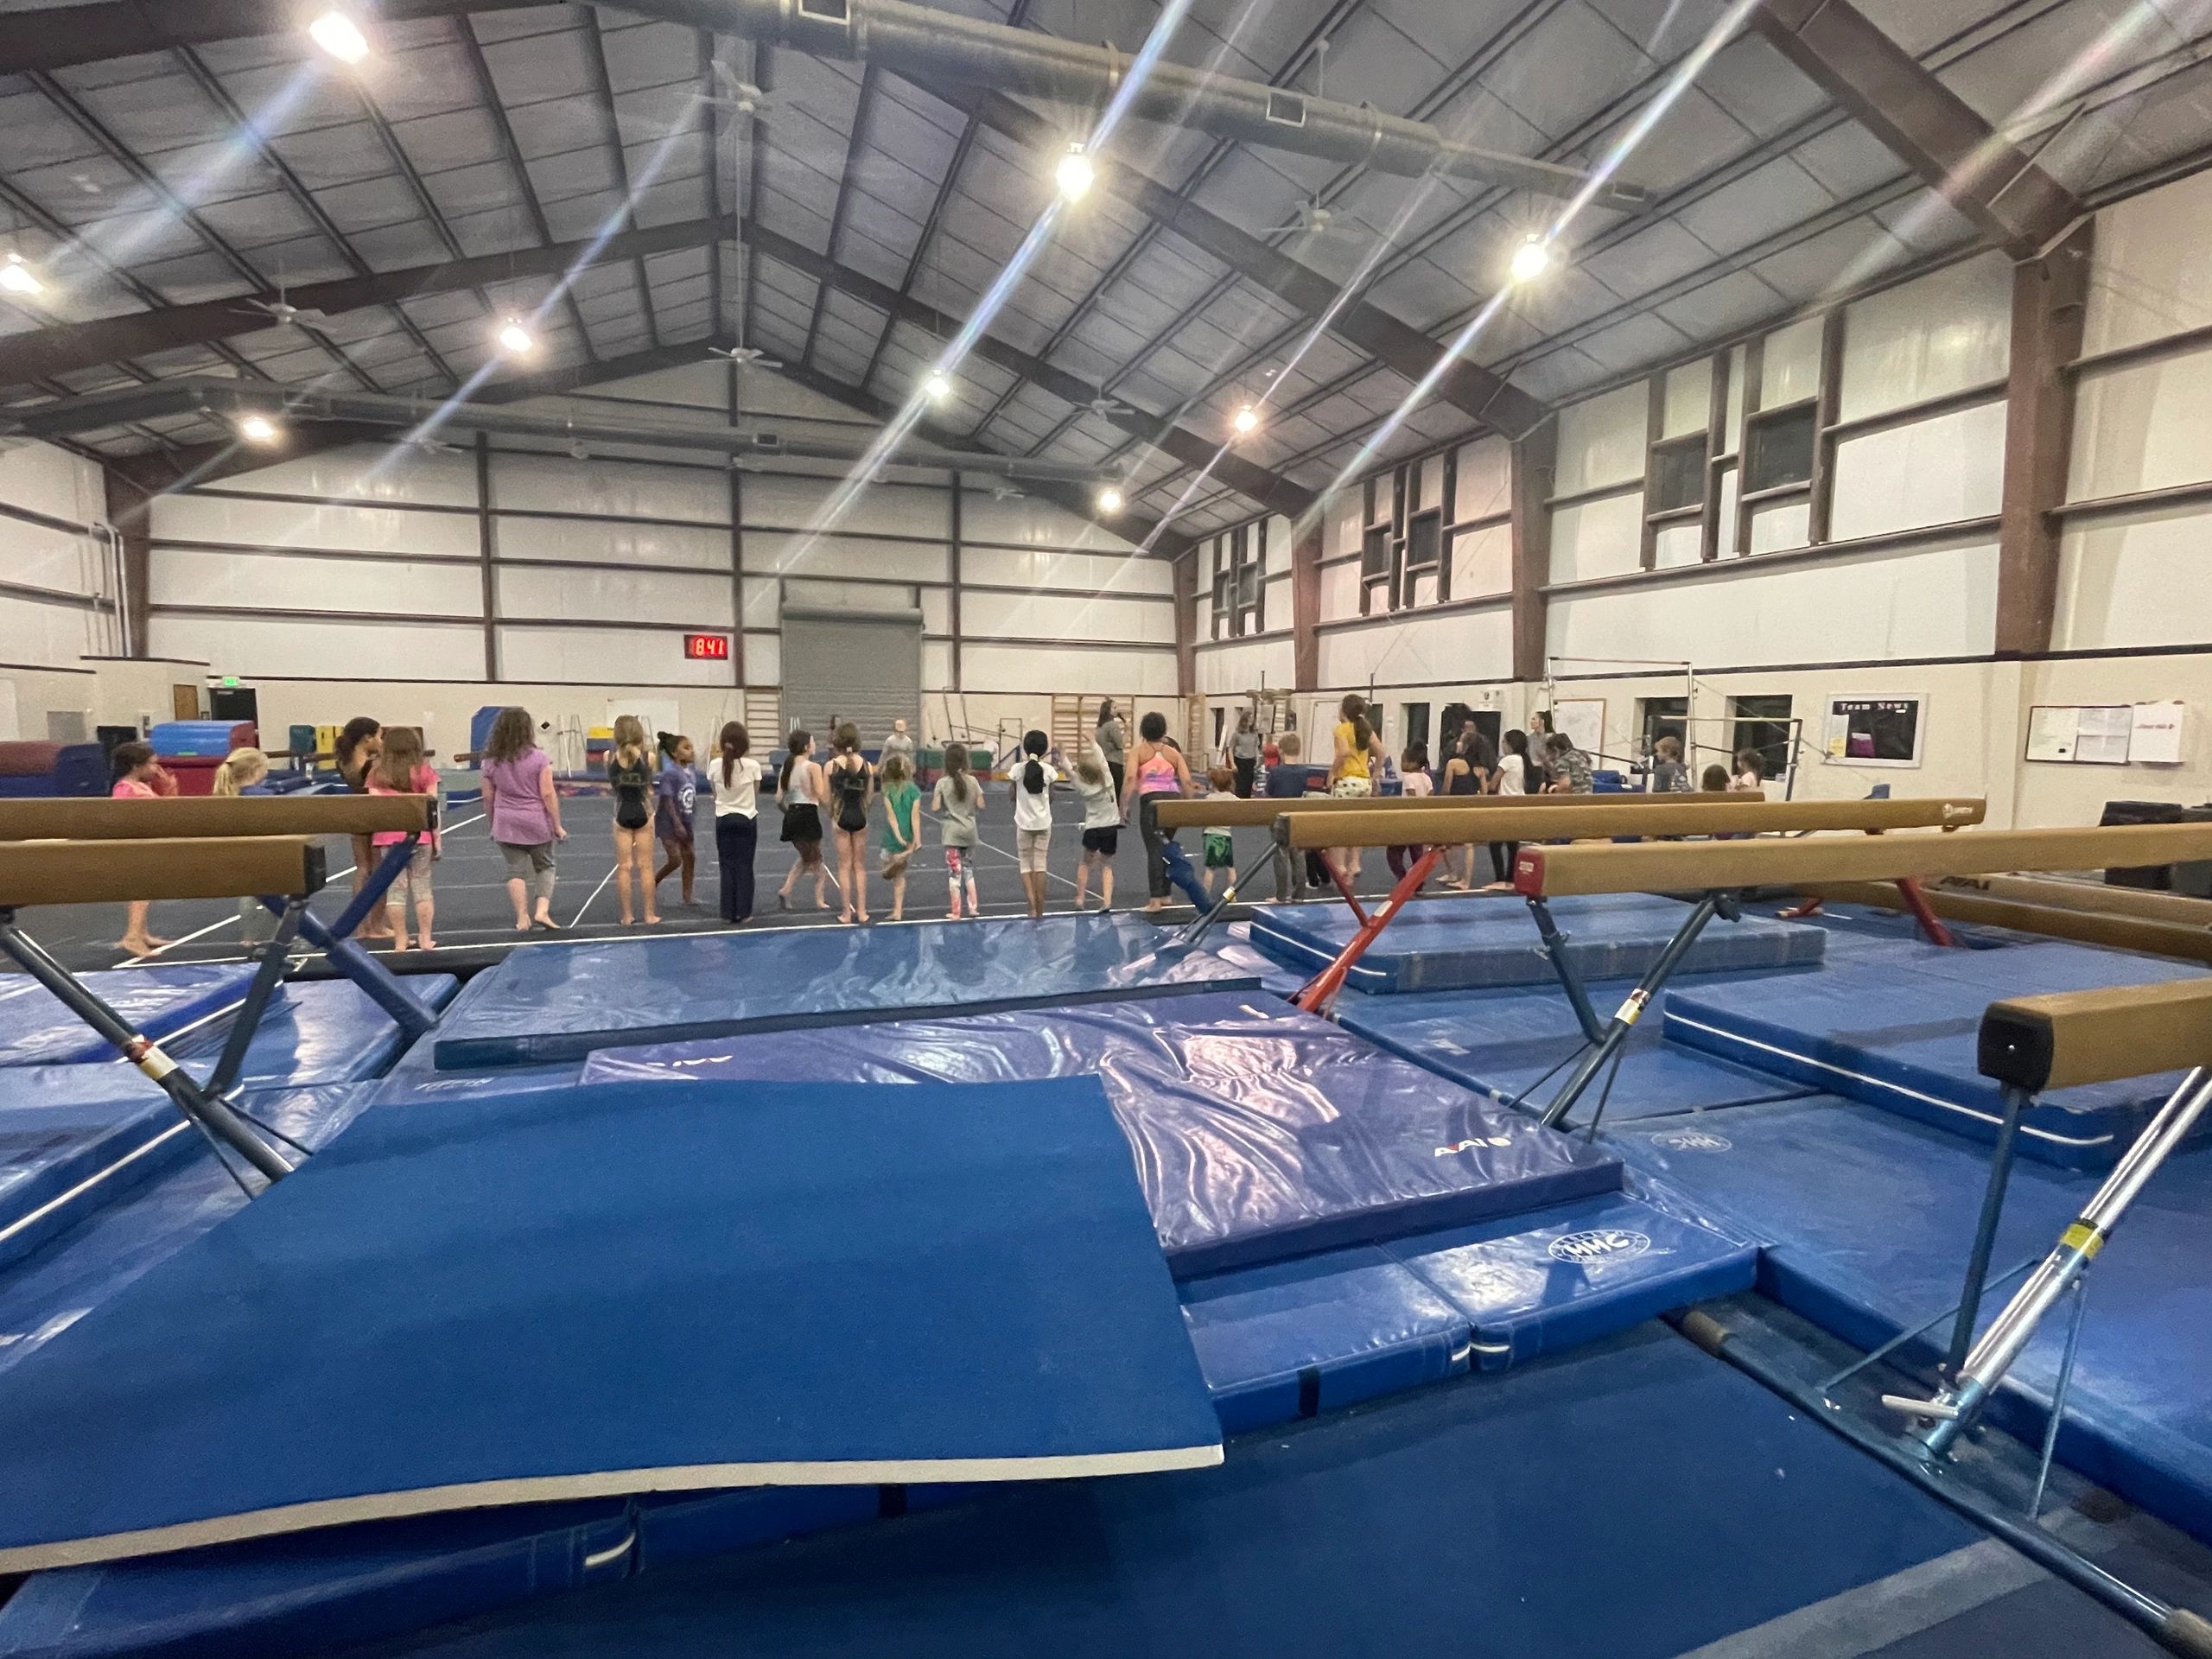 Summer Day Camps – Performance Gymnastics Academy